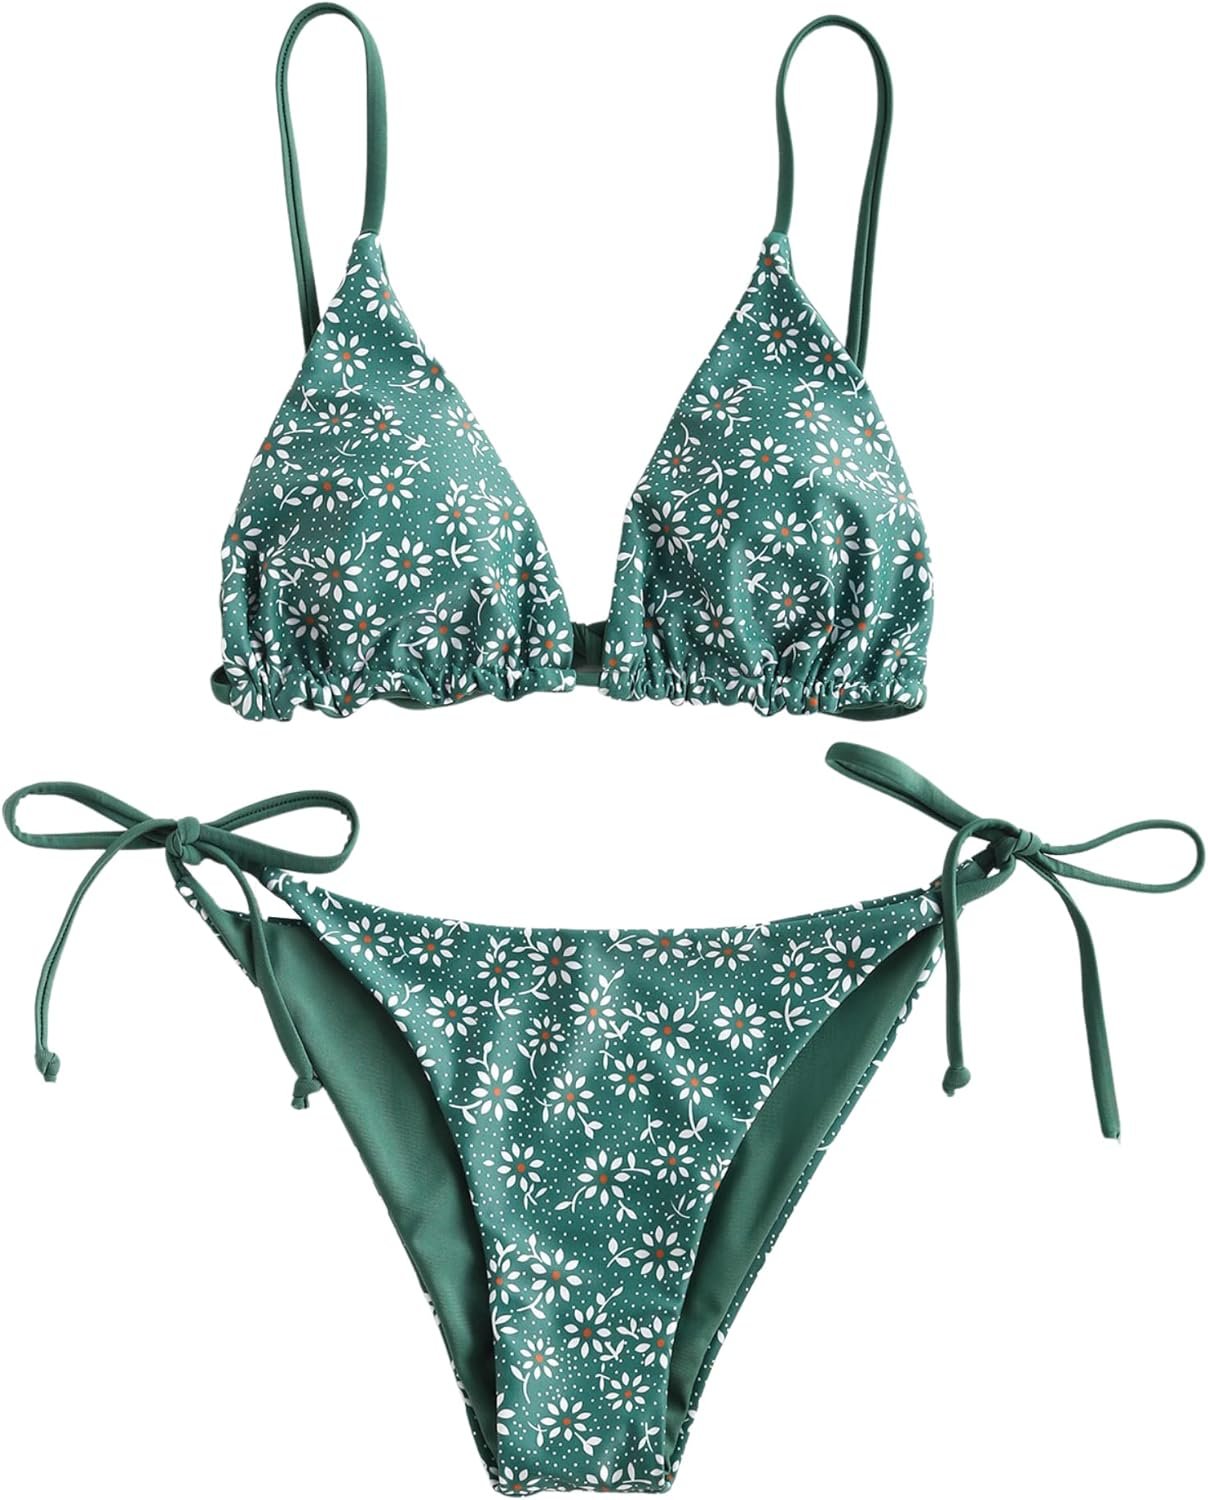 ZAFUL Womens Triangle Bikini Floral String Bikini Set Two Piece Swimsuit Bathing Suits